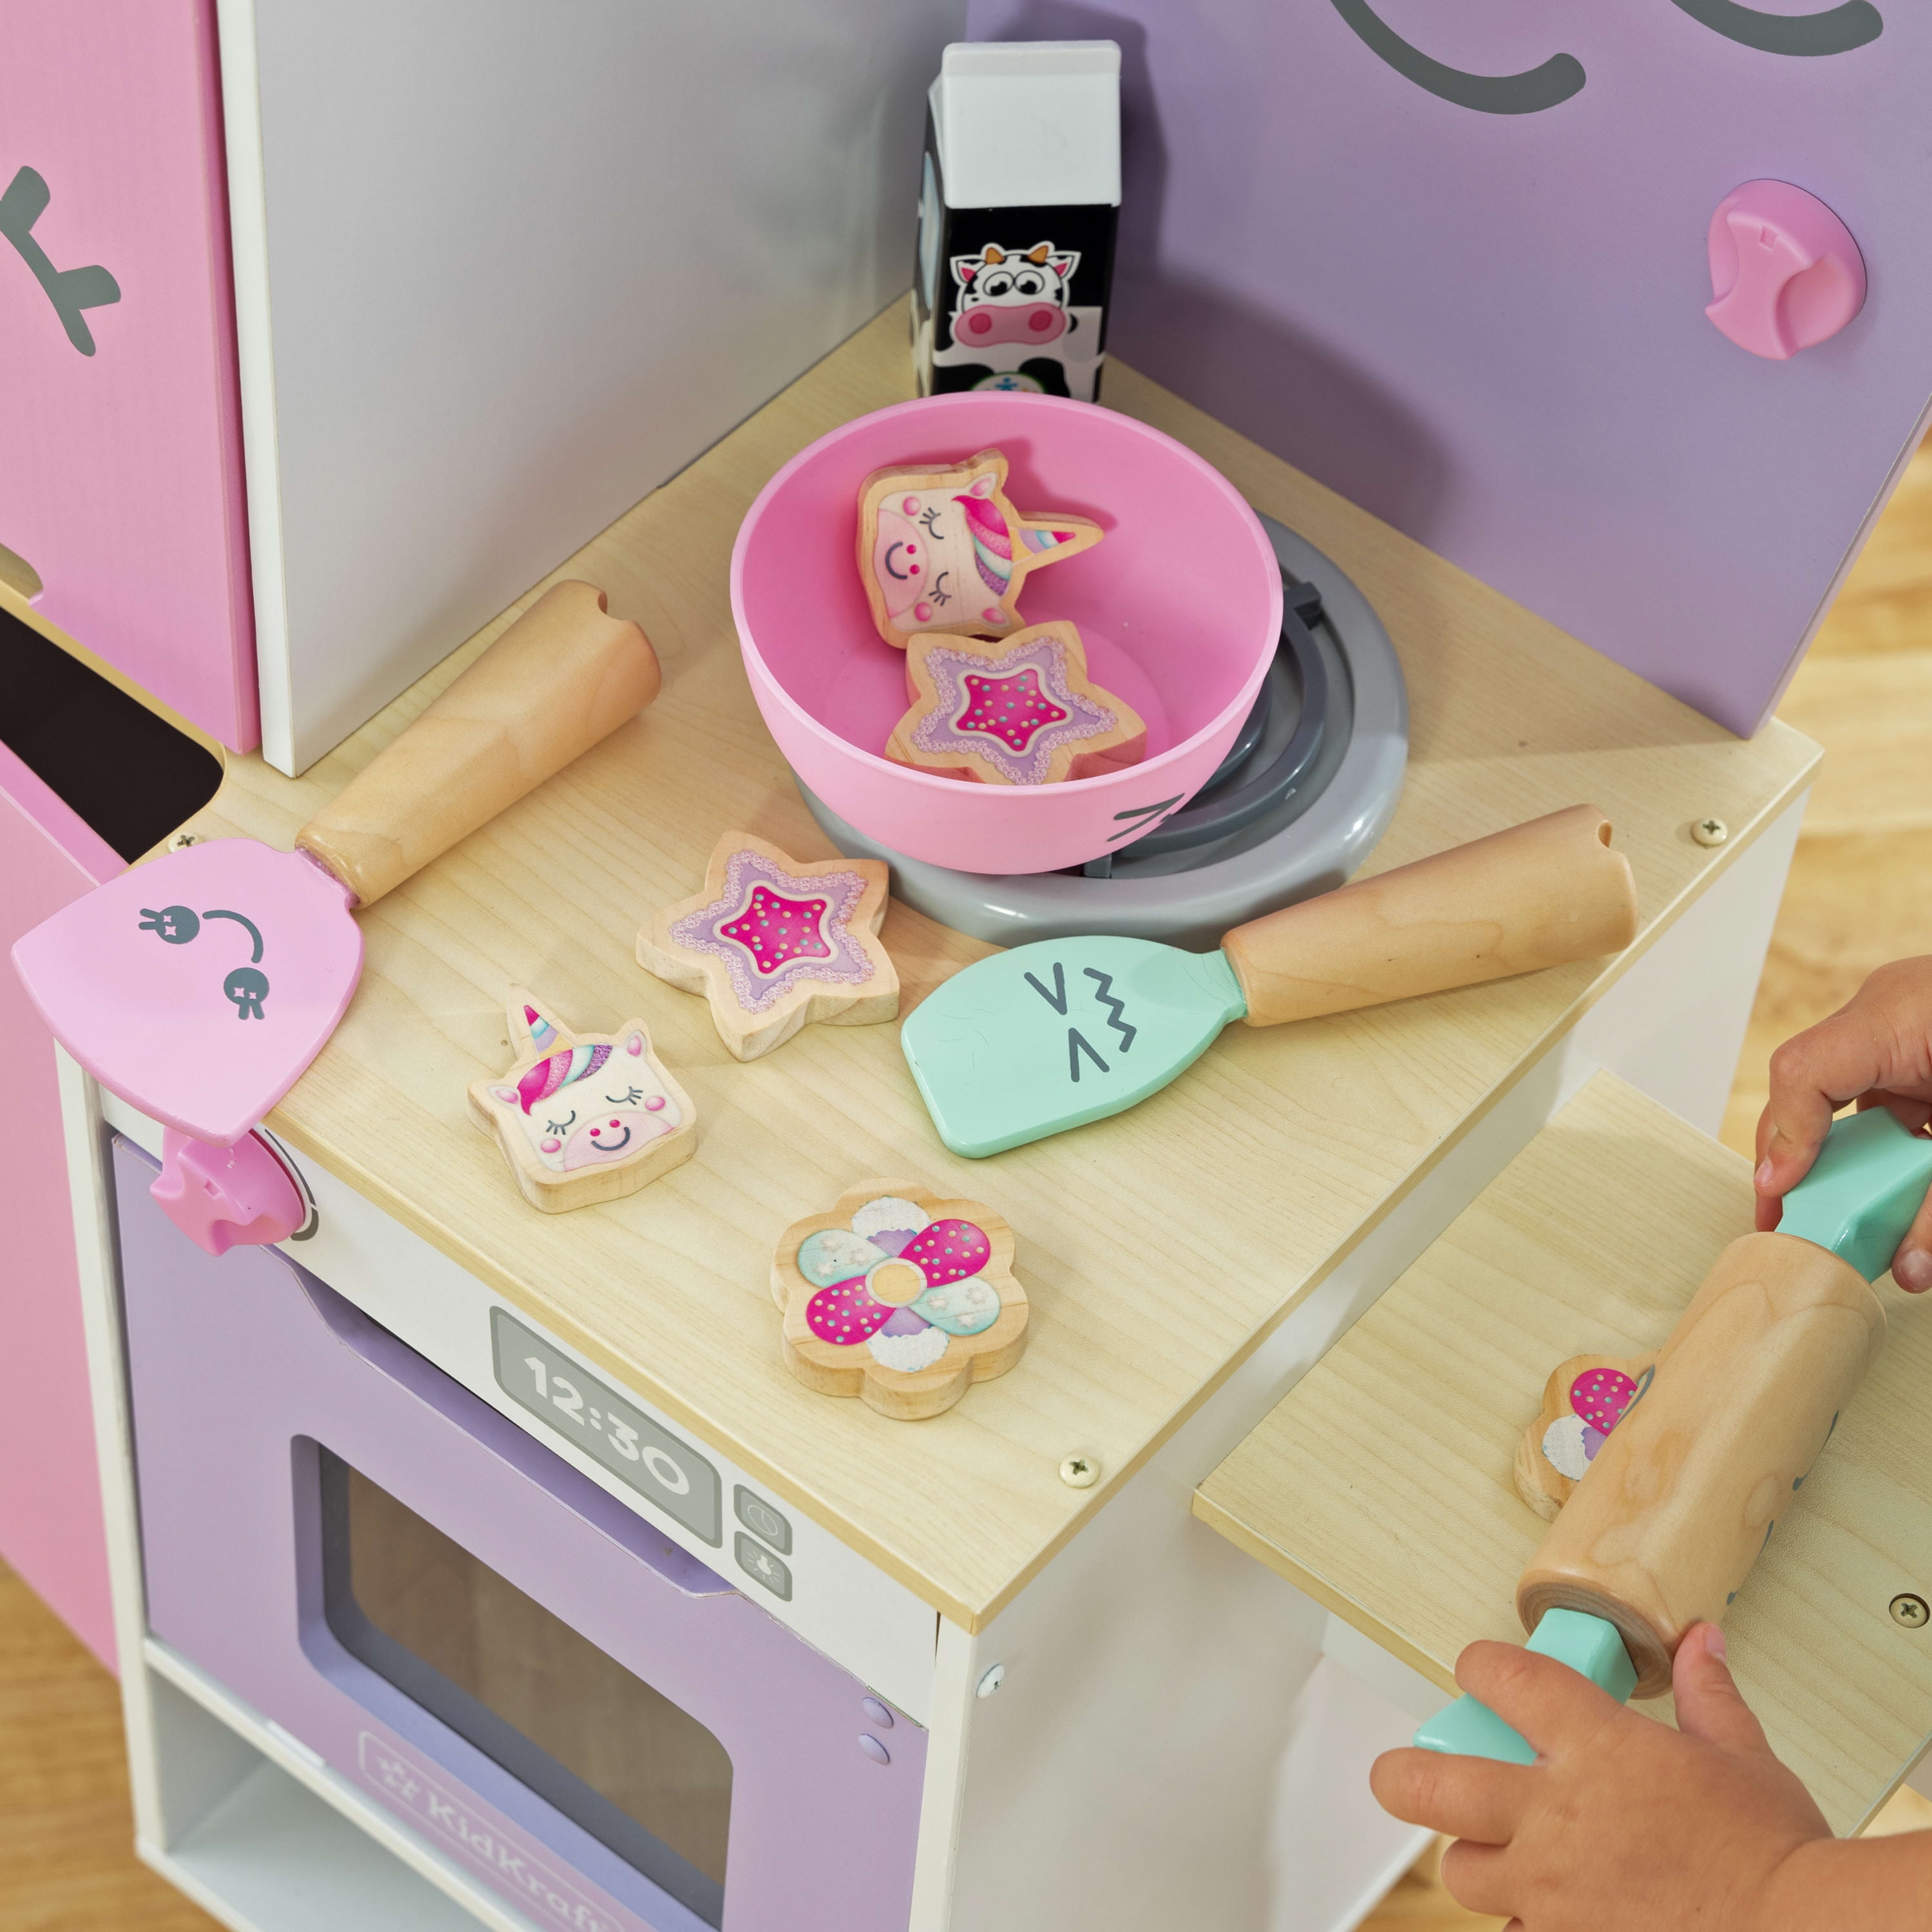 KidKraft Lil' Friends Wooden Play Kitchen with 14 Accessories